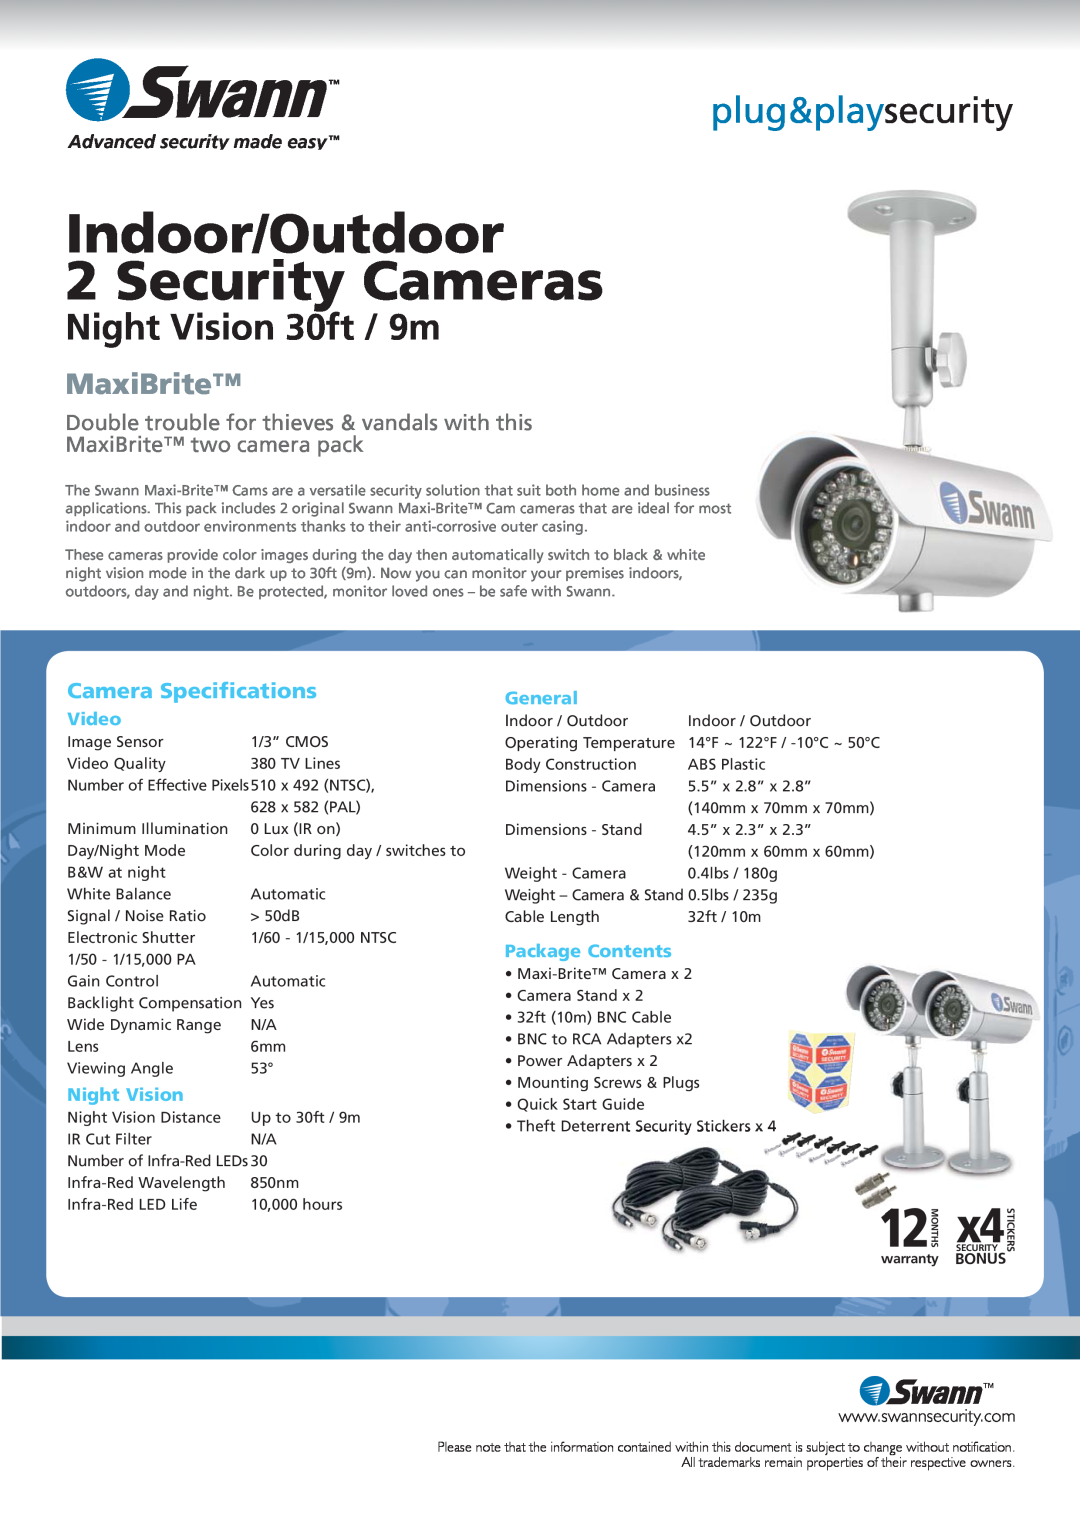 Swann SW215-2MX Bonus, Indoor/Outdoor 2 Security Cameras, plug&playsecurity, Night Vision 30ft / 9m, MaxiBrite, General 